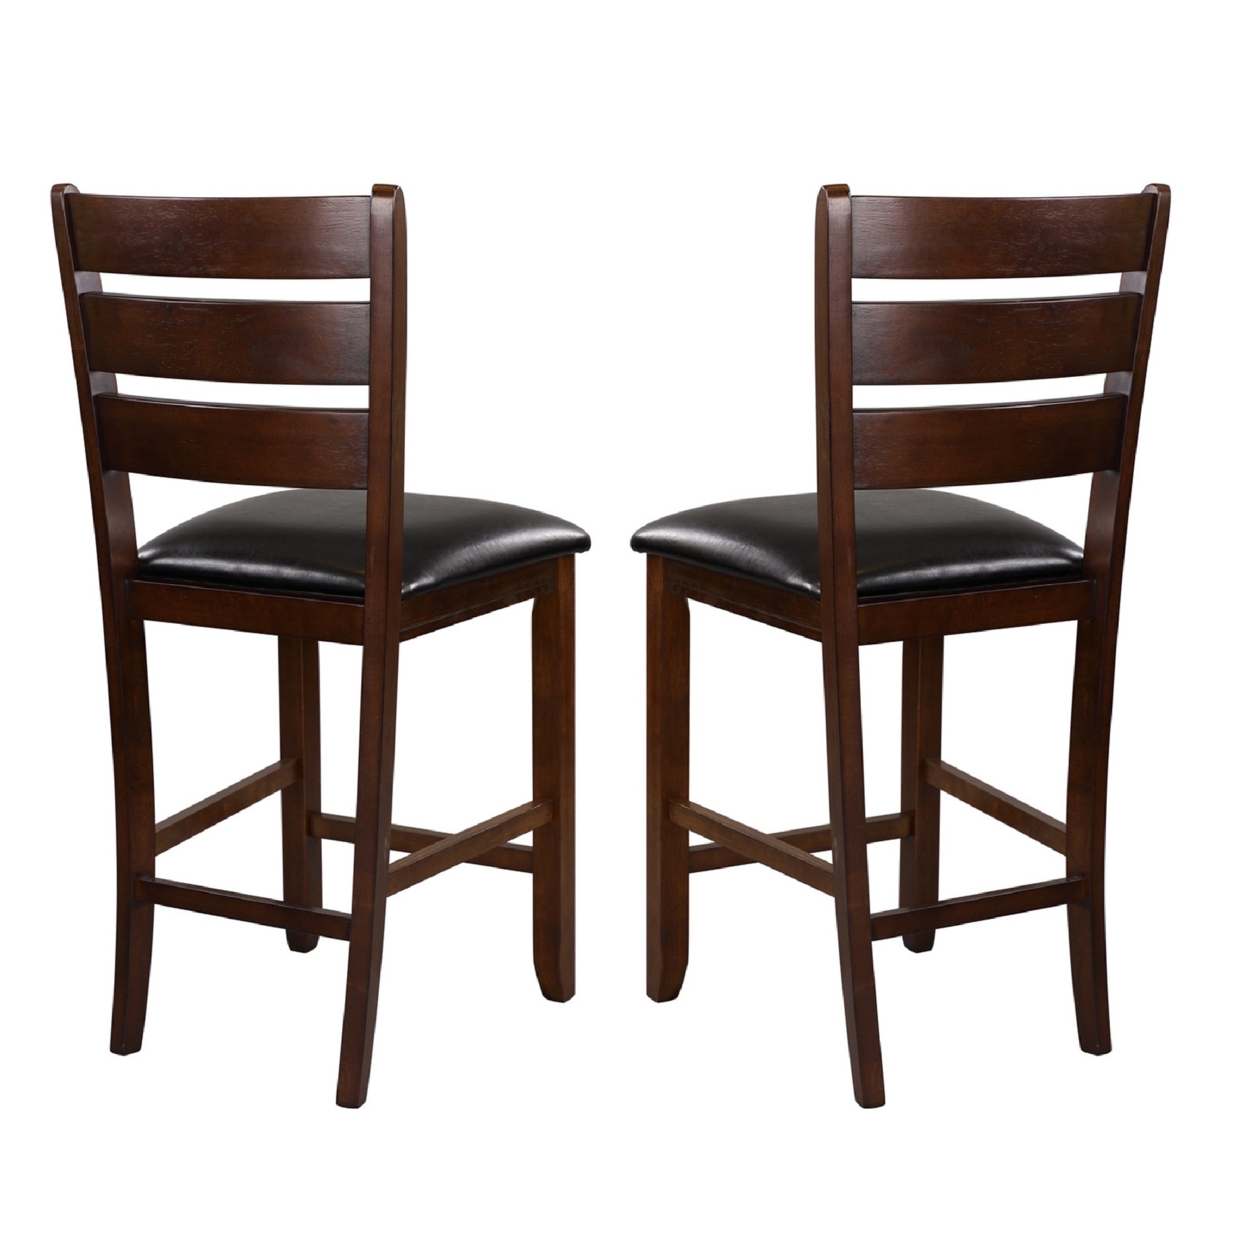 WoodCounter Height Chairs With Slatted Backs, Set Of 2, Dark Brown- Saltoro Sherpi